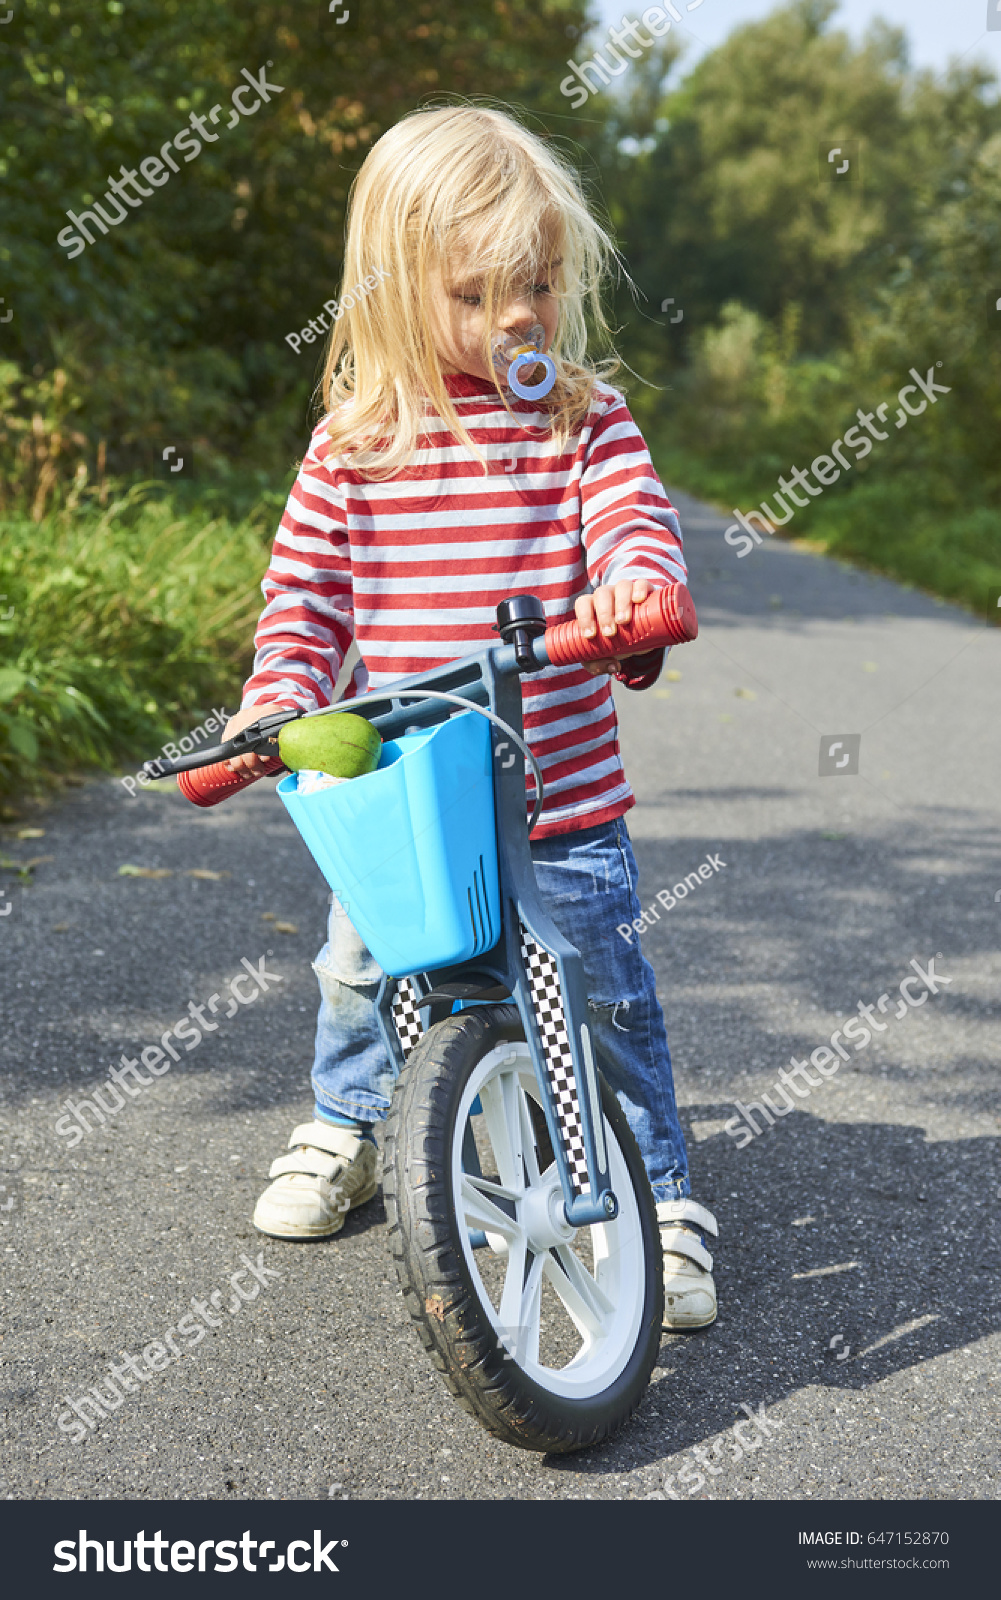 street girl balance bike